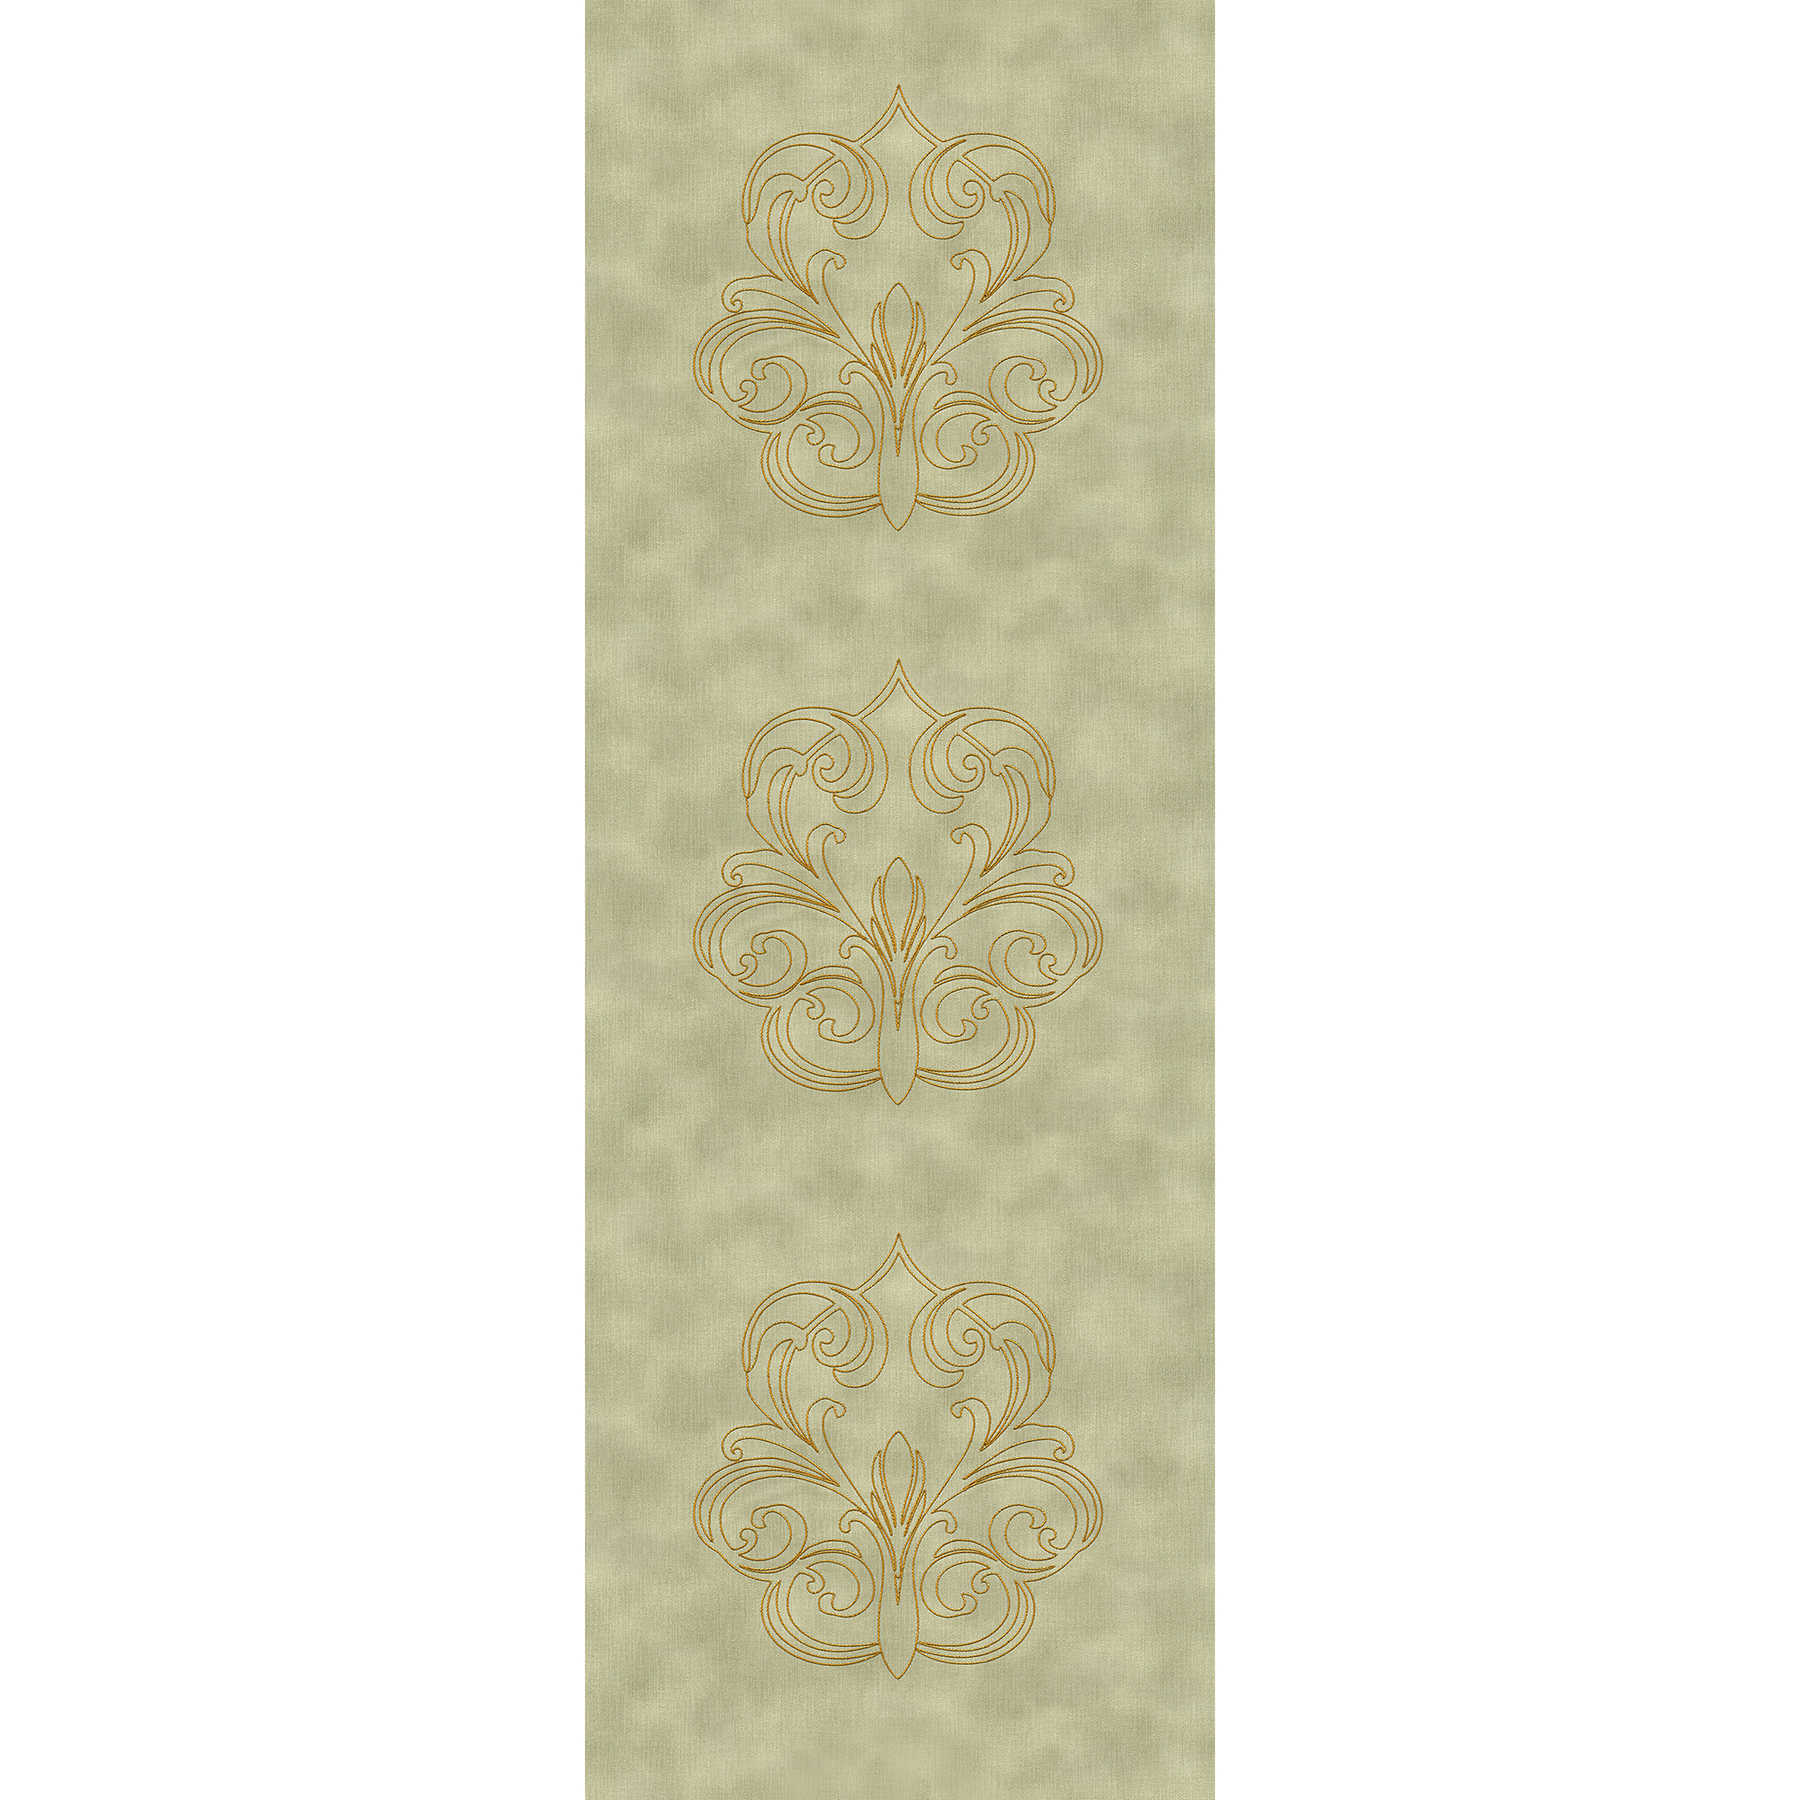         Premium-Panel mit Barock Ornamenten – Grün, Gold
    